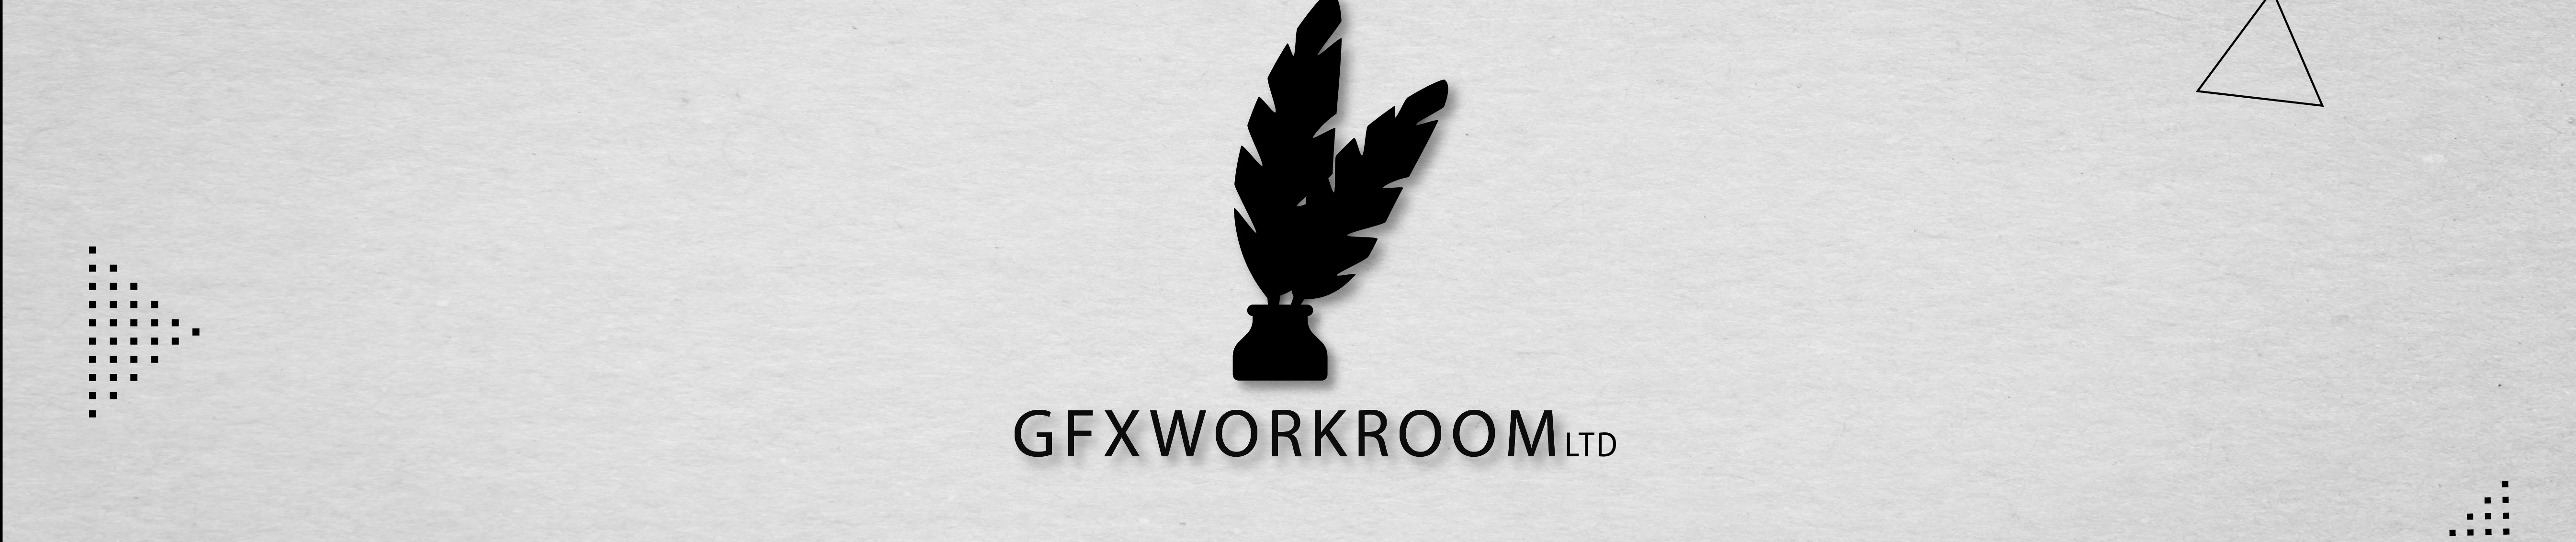 GFX workroom's profile banner